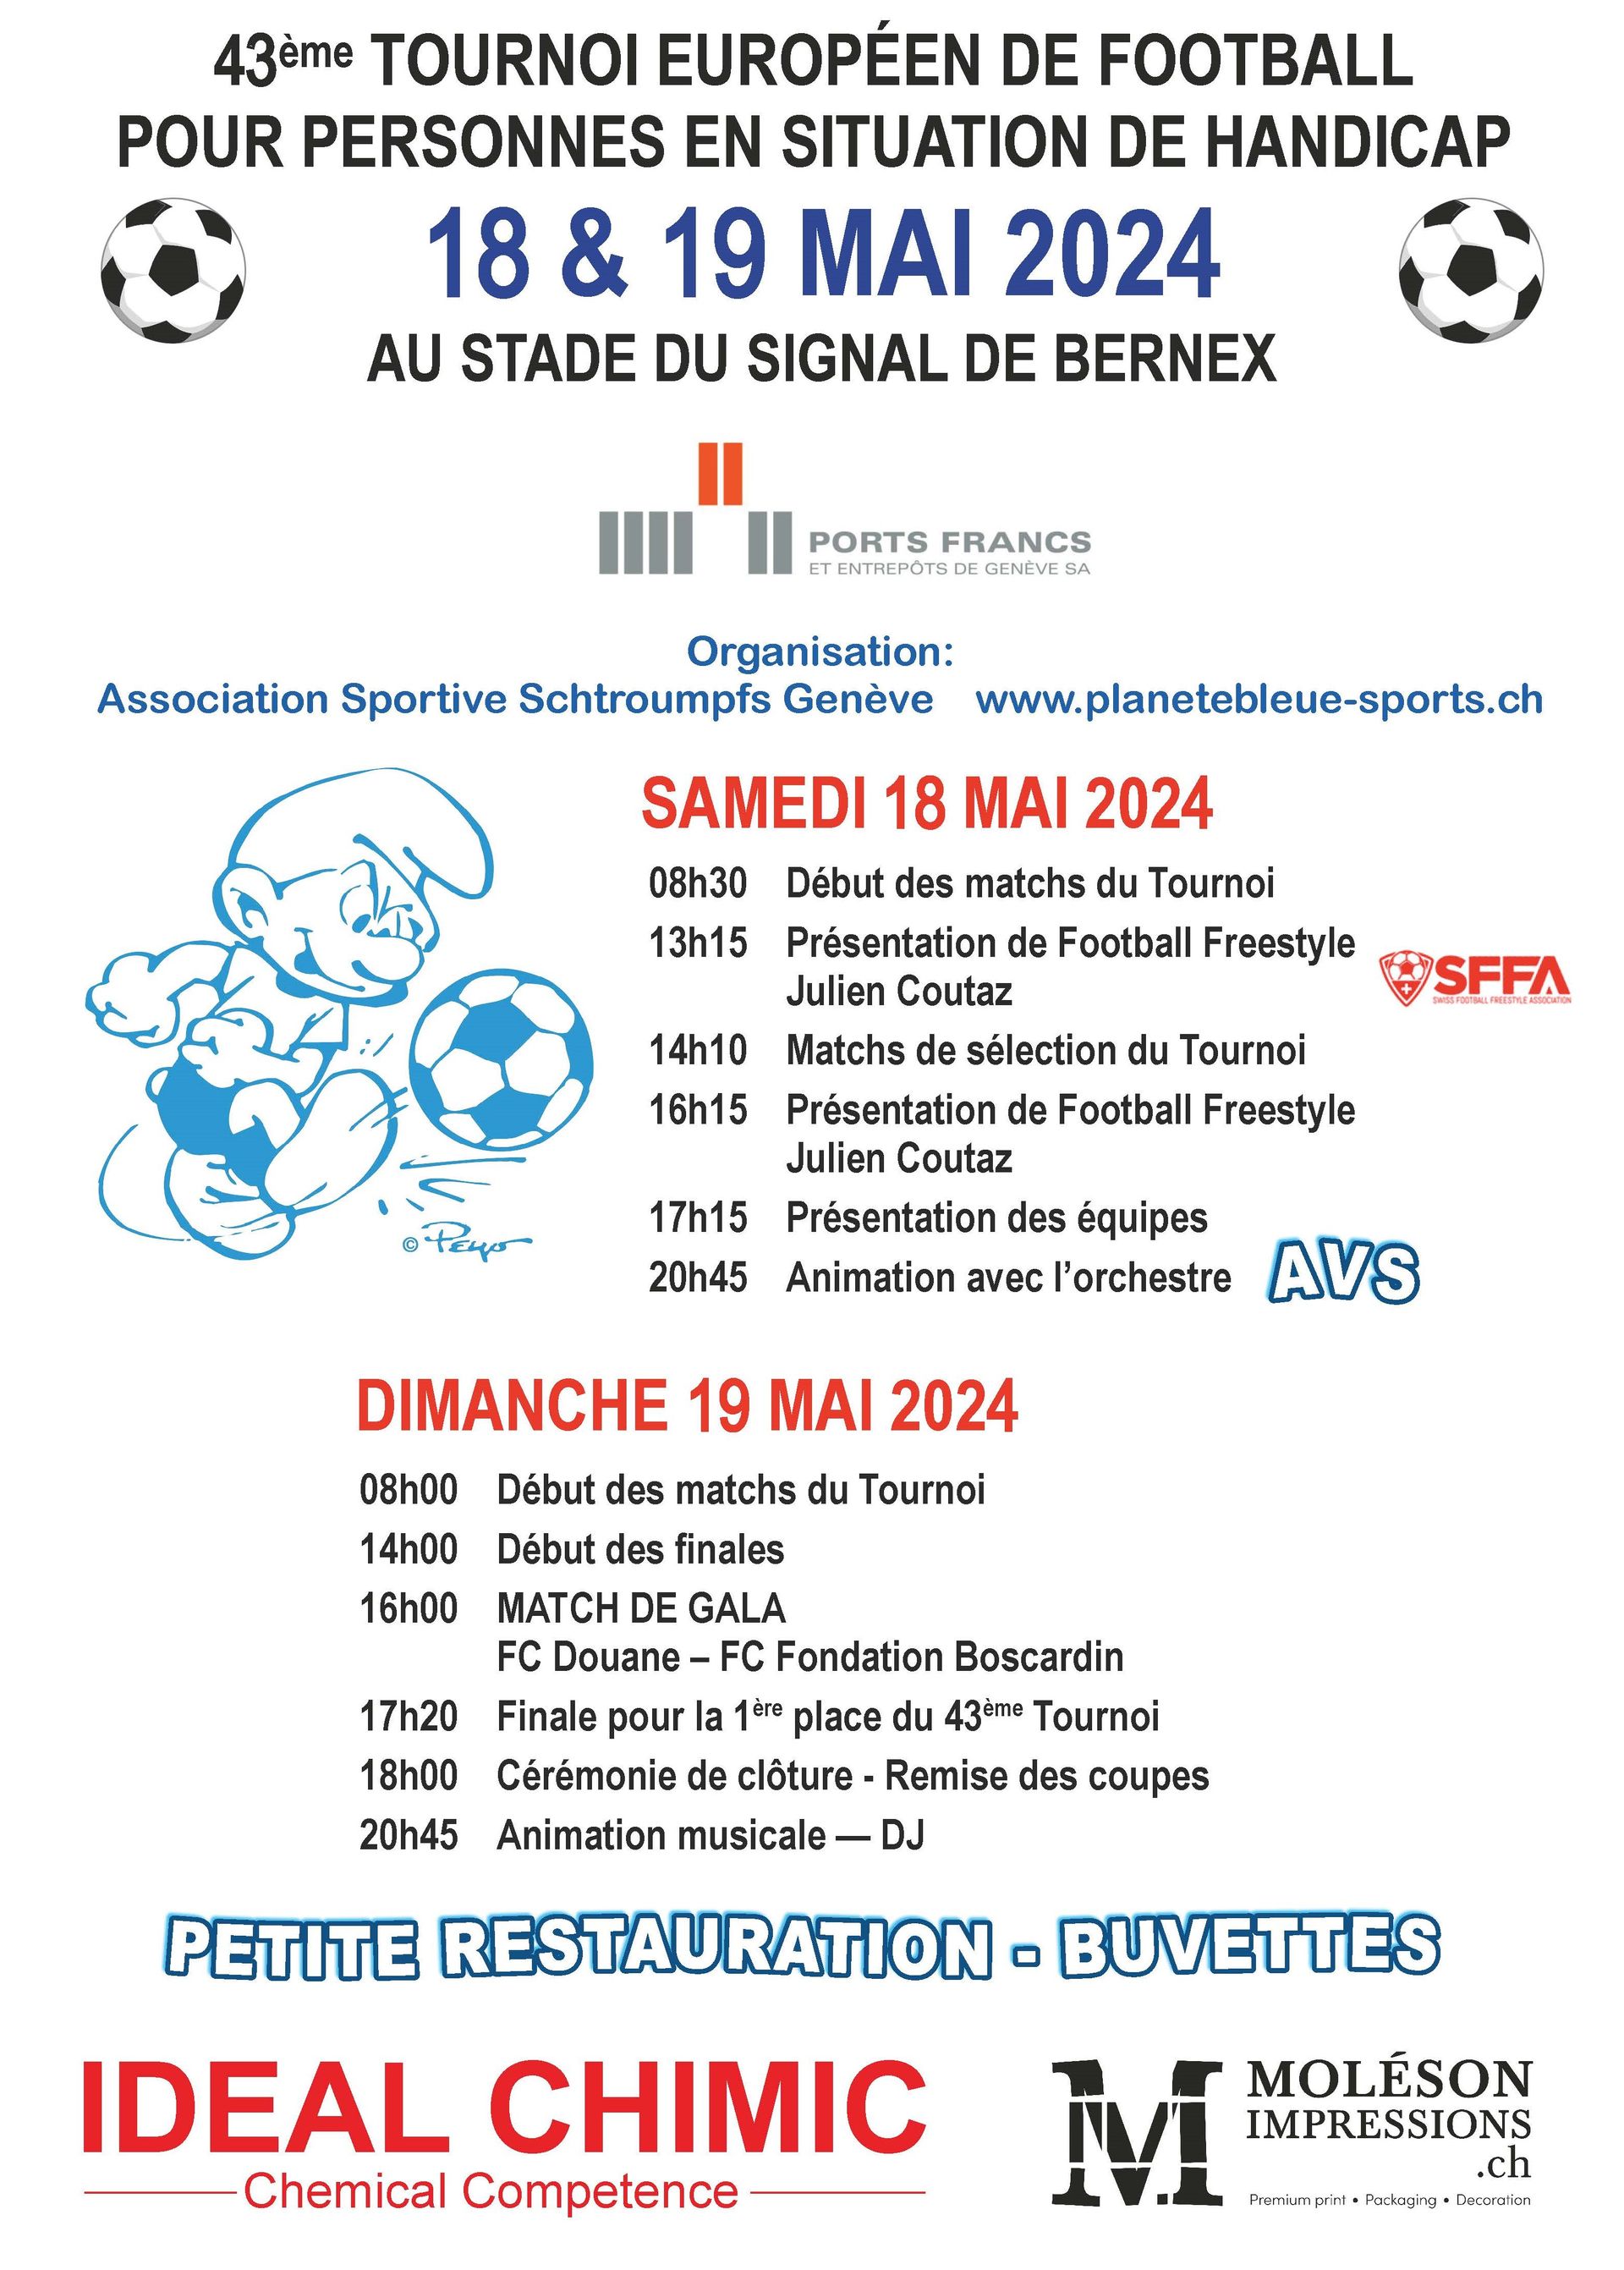 Association Sportive Schtroumpfs Genève